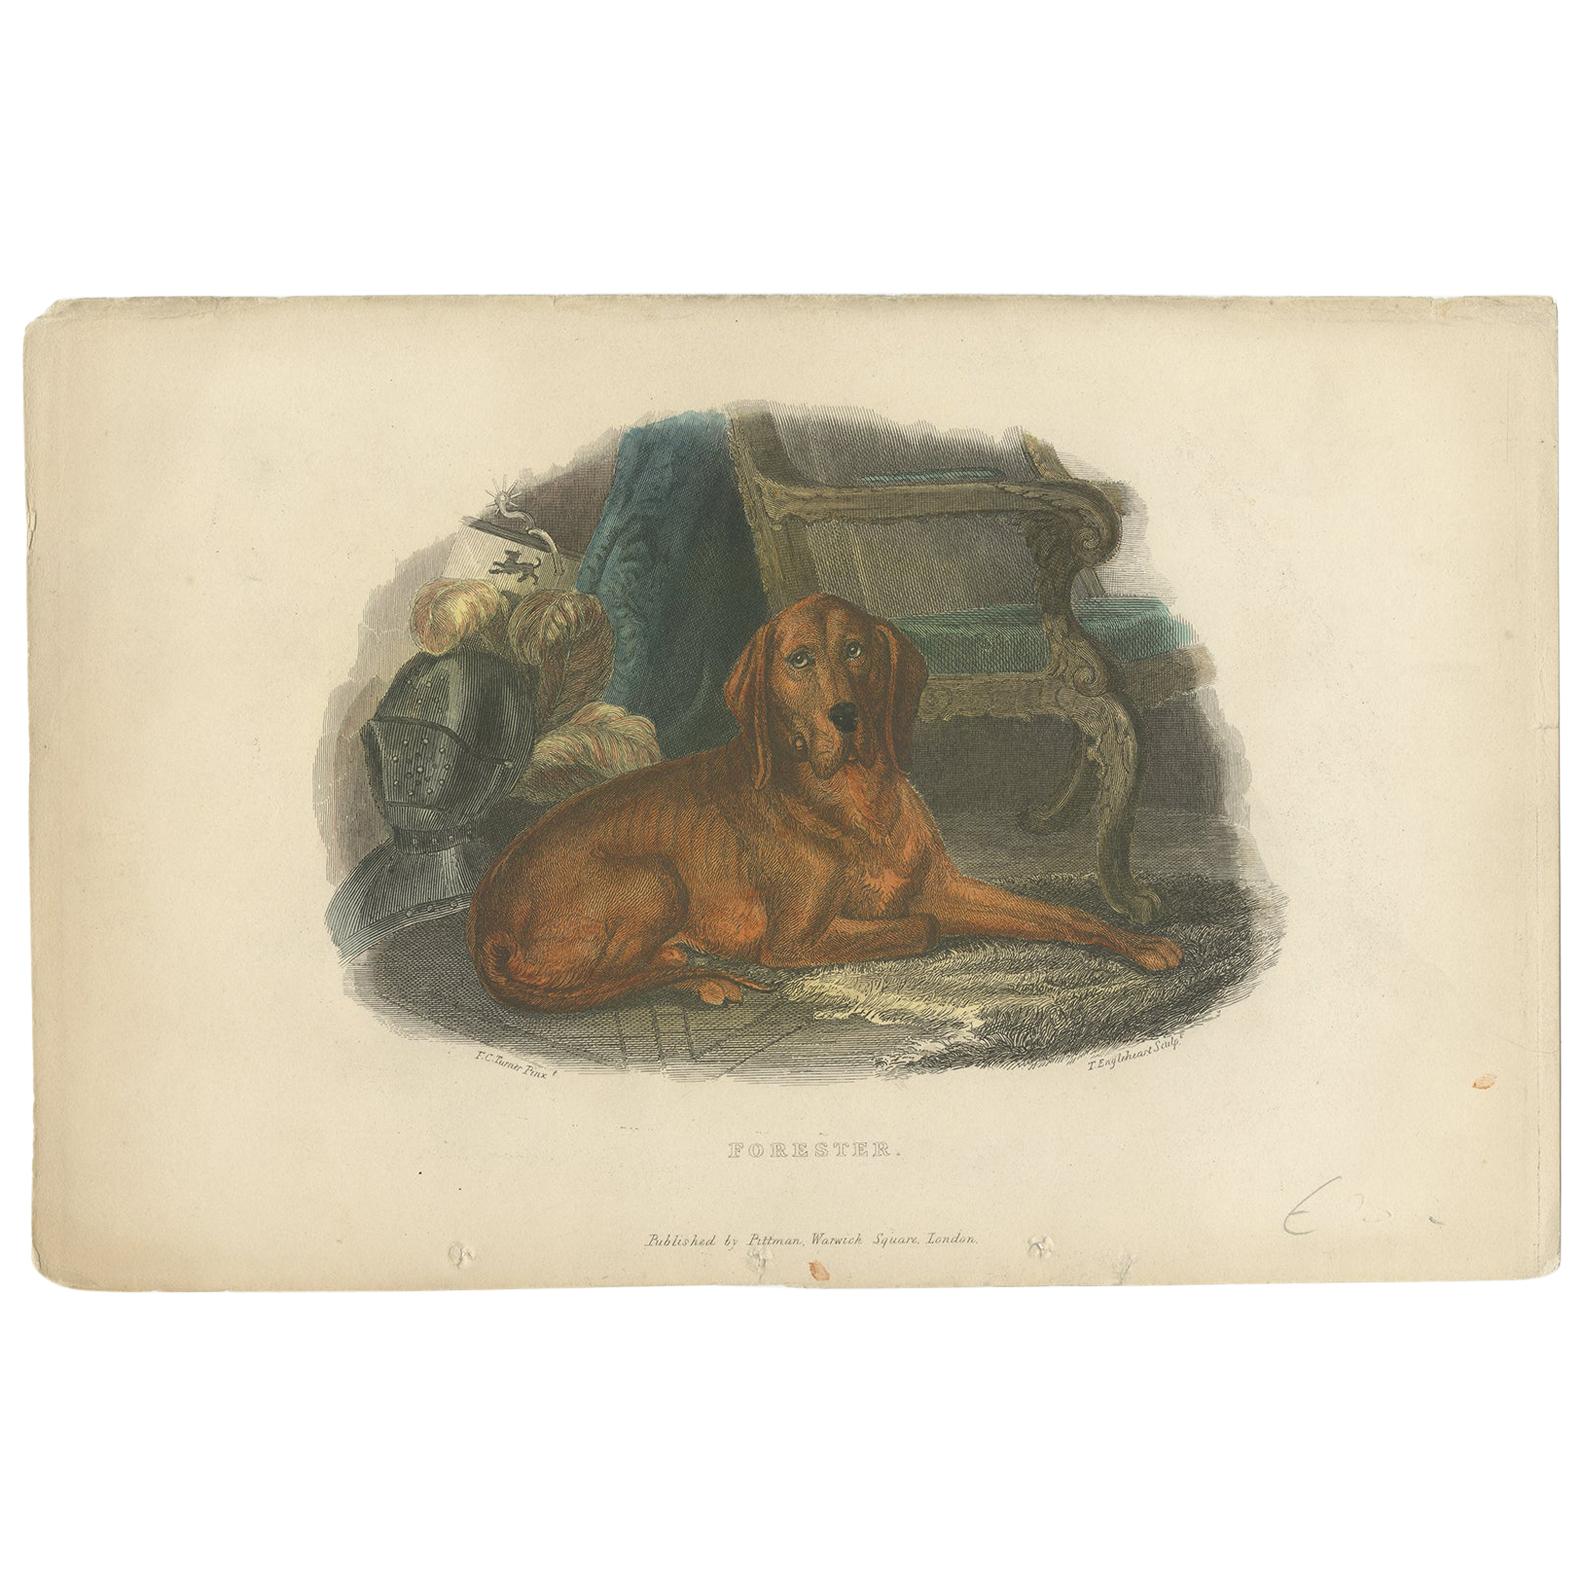 Antique Print of a Hound Dog by Pittman, 'circa 1835'